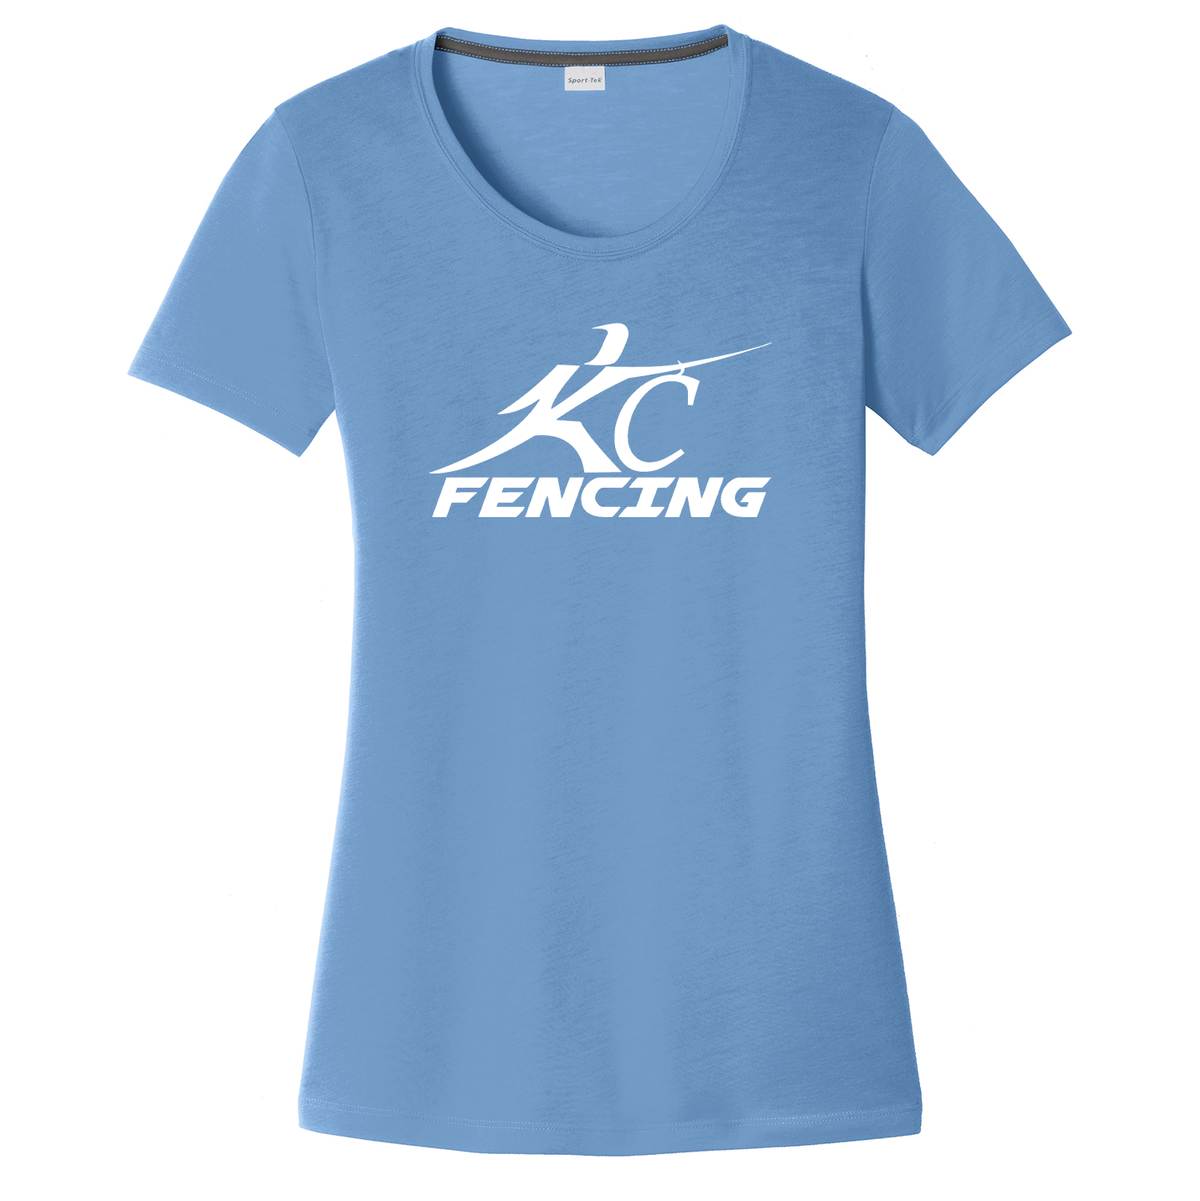 Kansas City Fencing Center Women's CottonTouch Performance T-Shirt